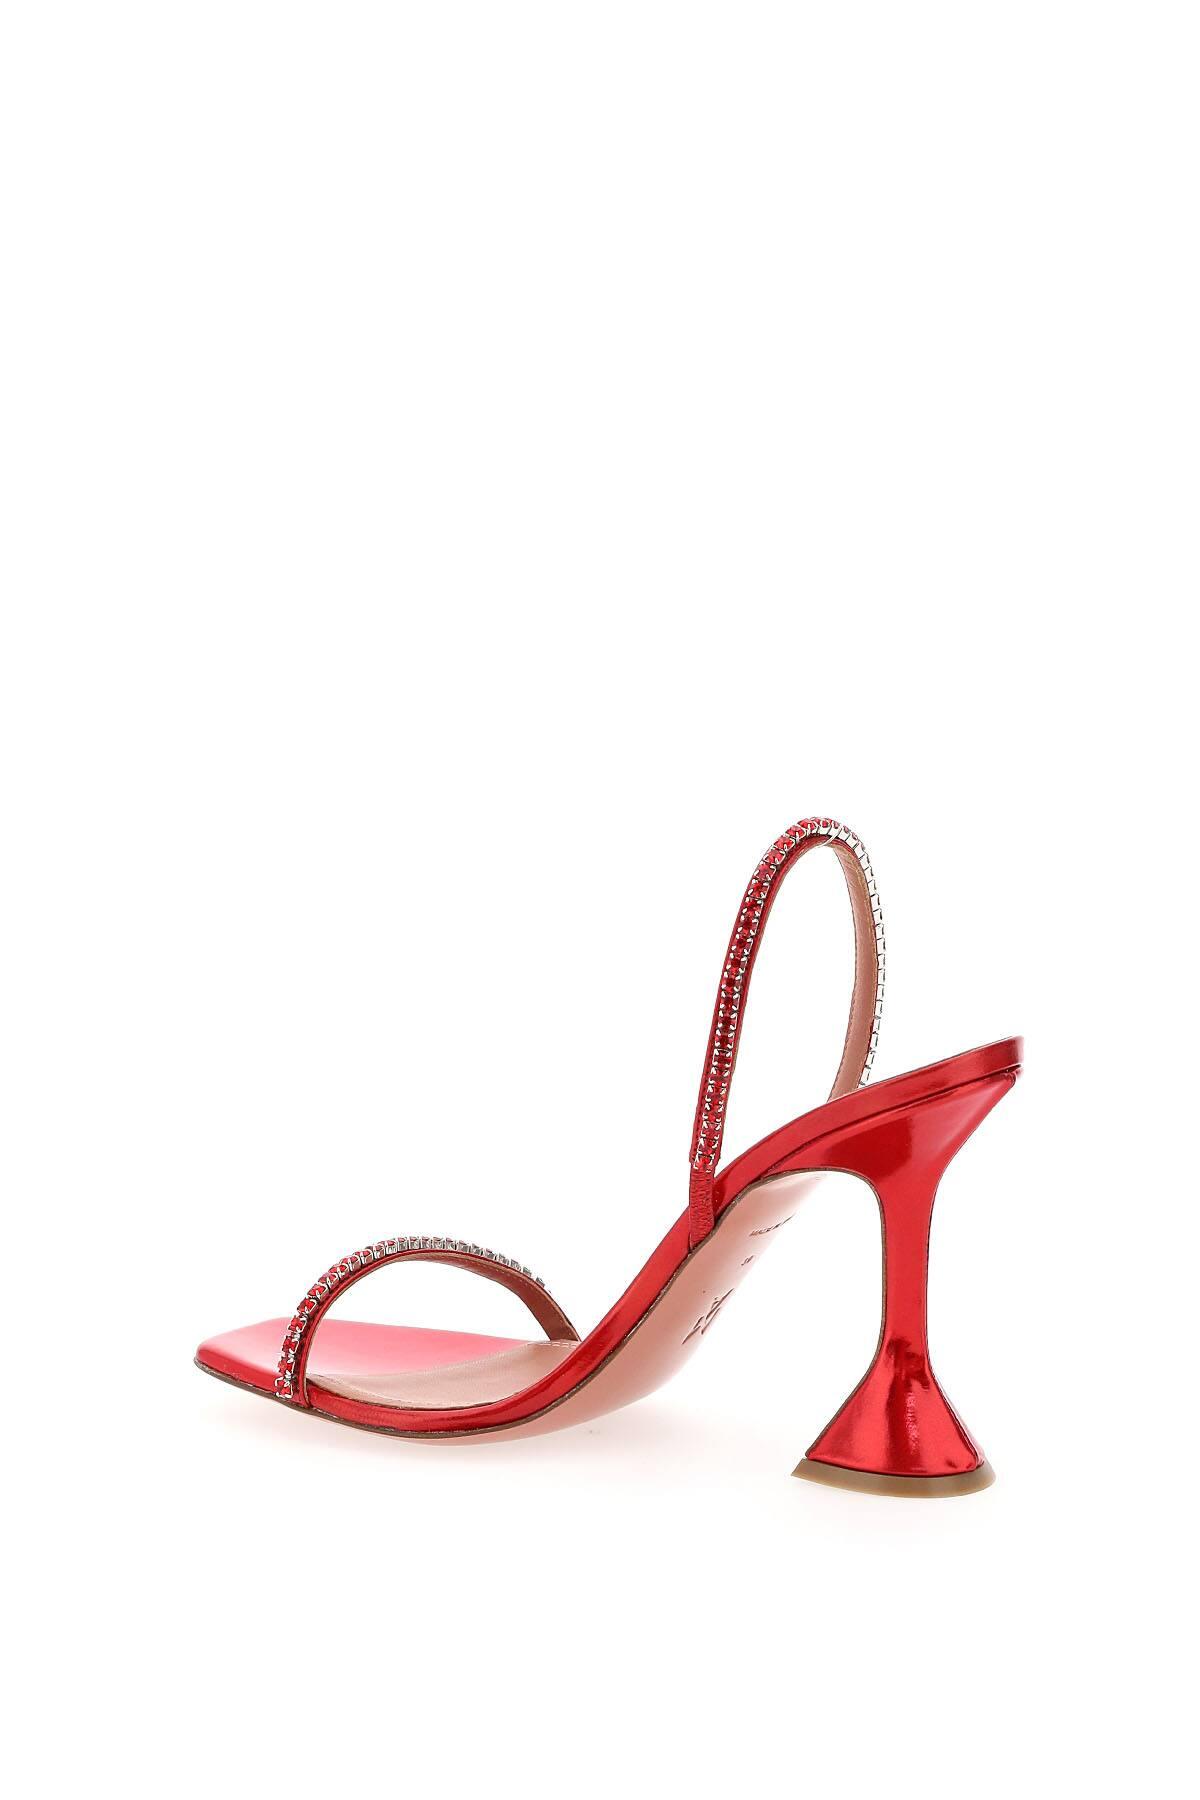 Buy > amina muaddi red heels > in stock